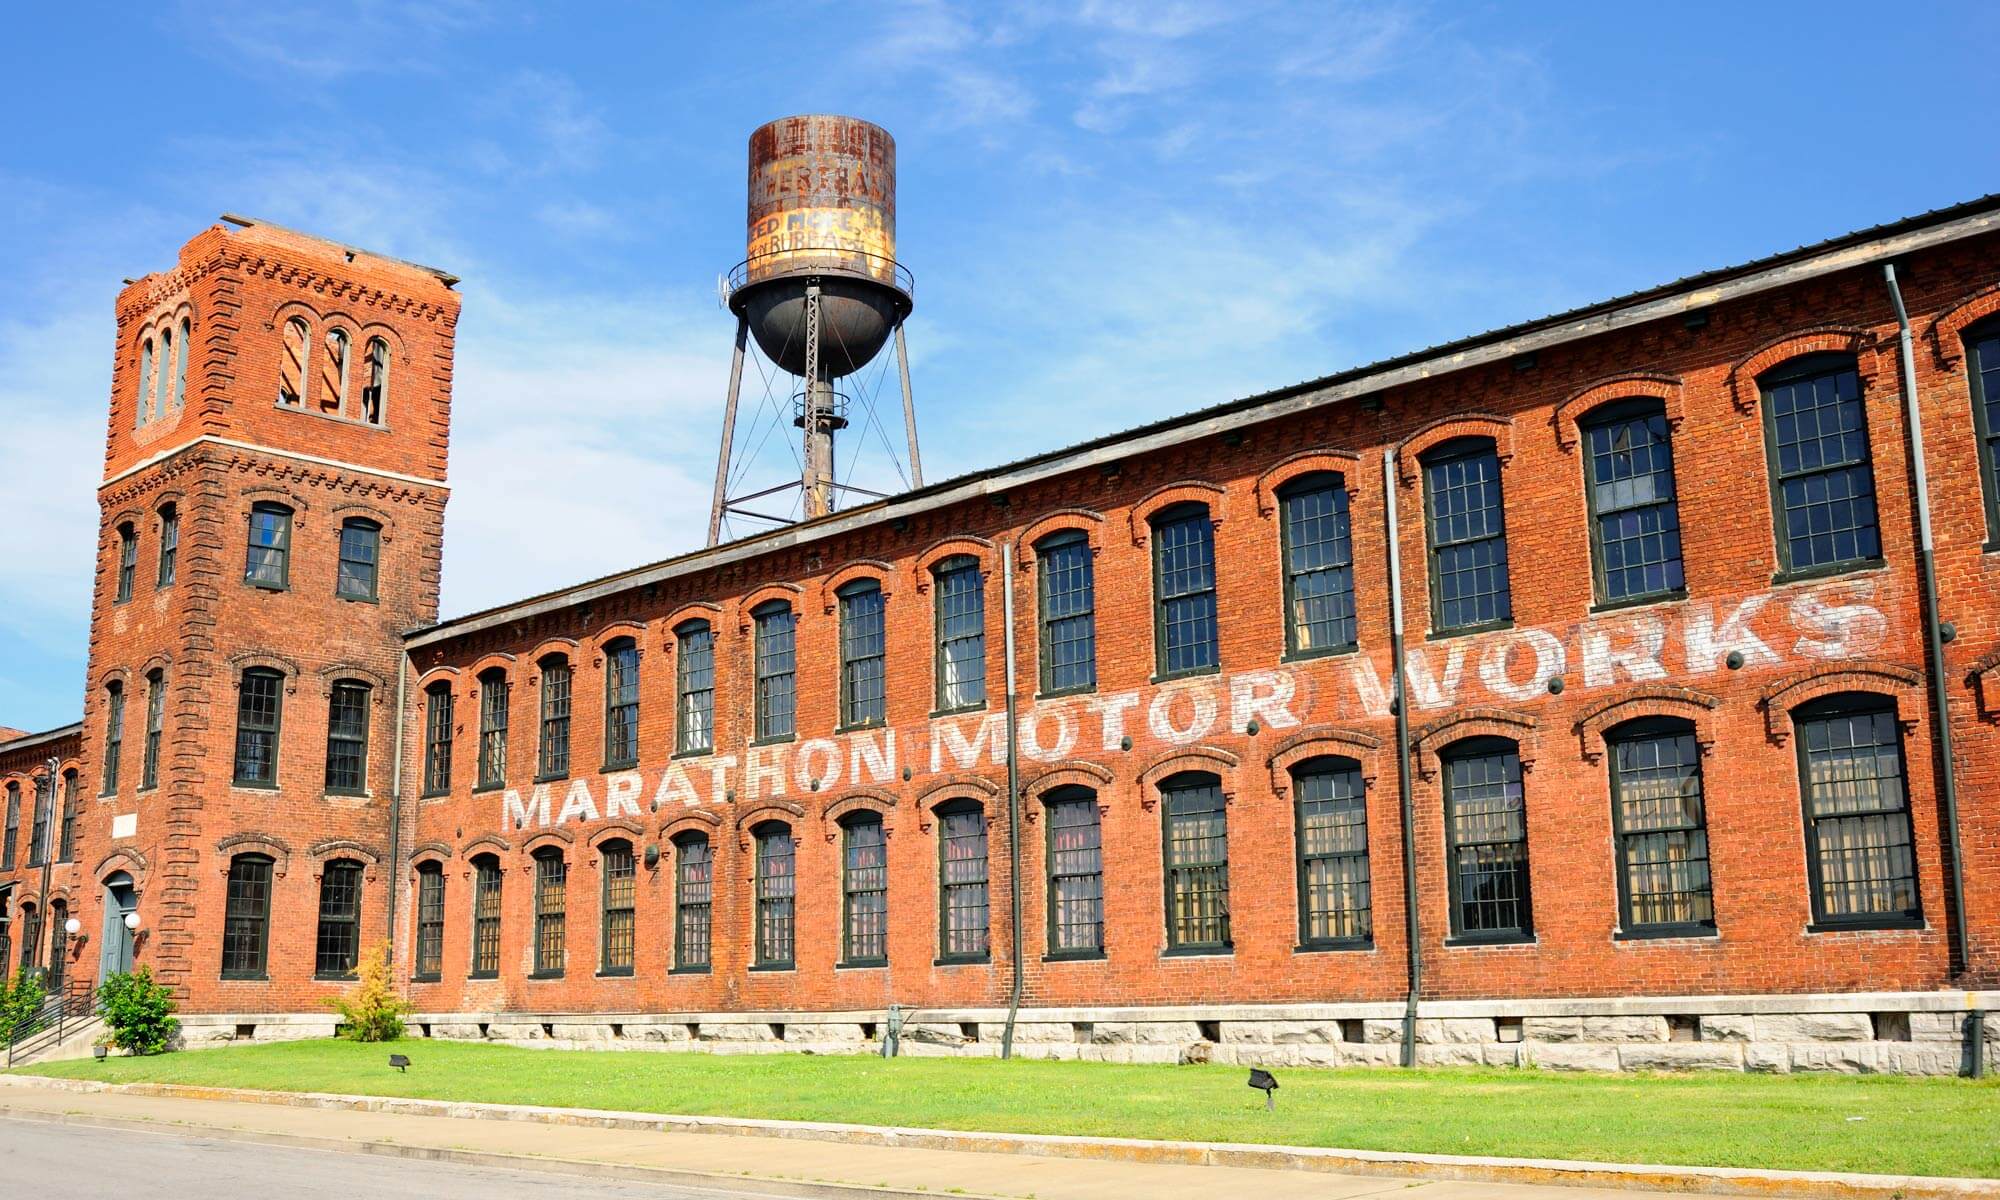 The exterior of the old, brick Marathon Motorworks Building in Nashville, TN